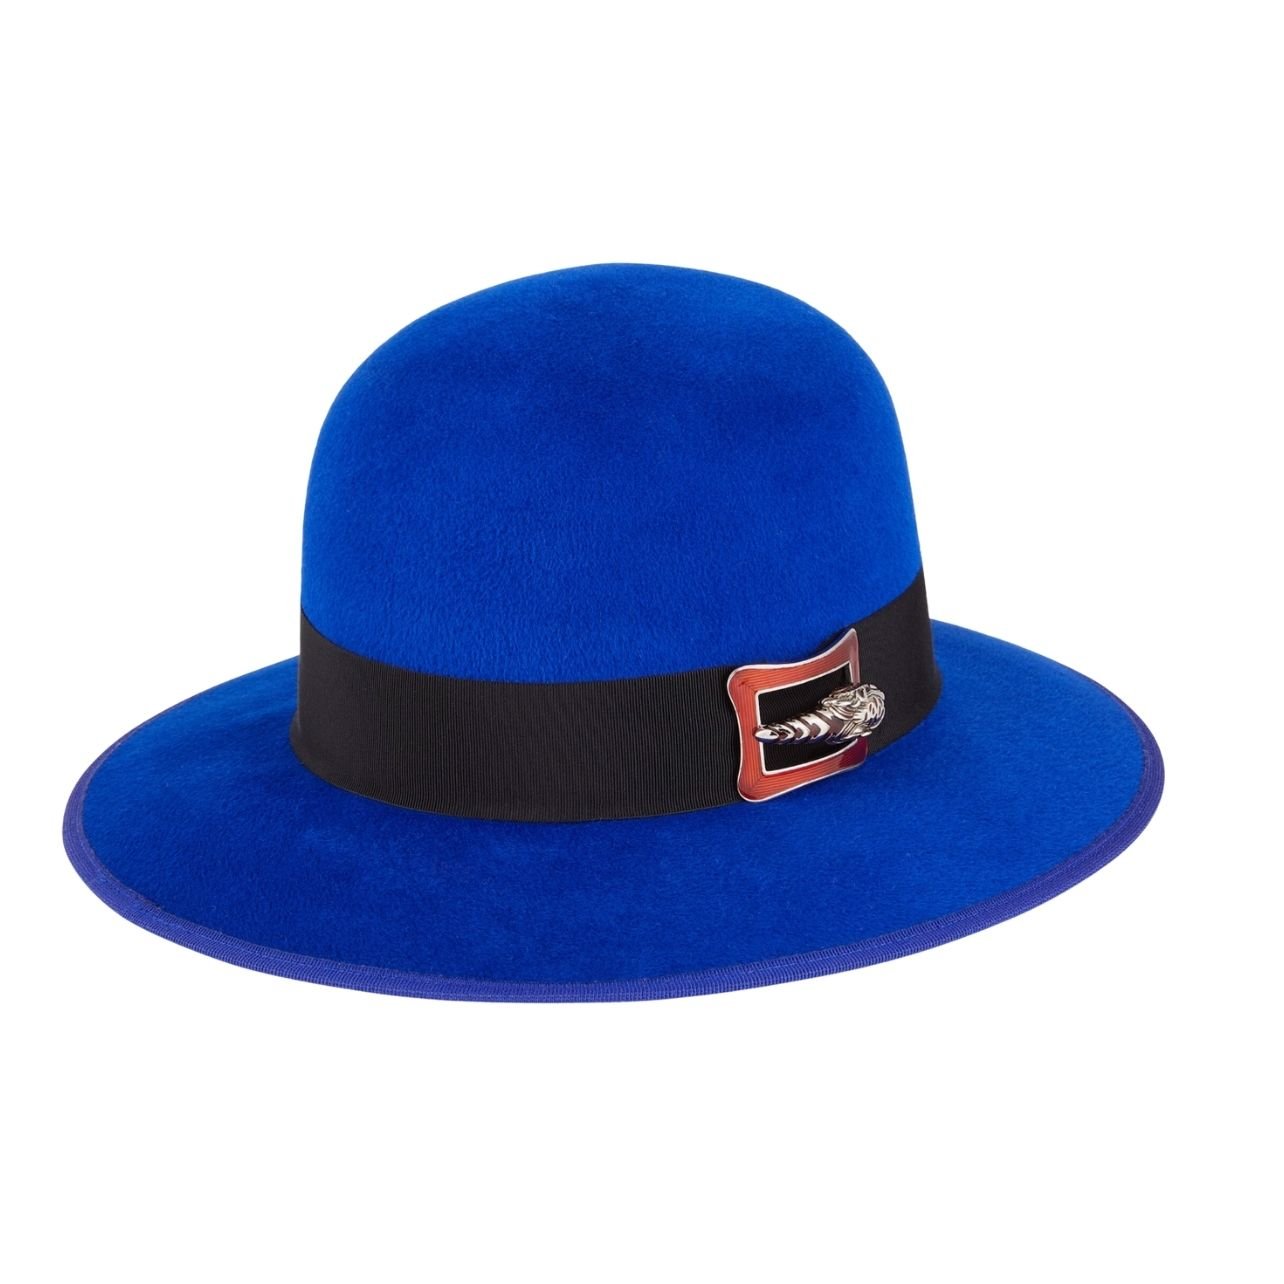 Blue felt hat